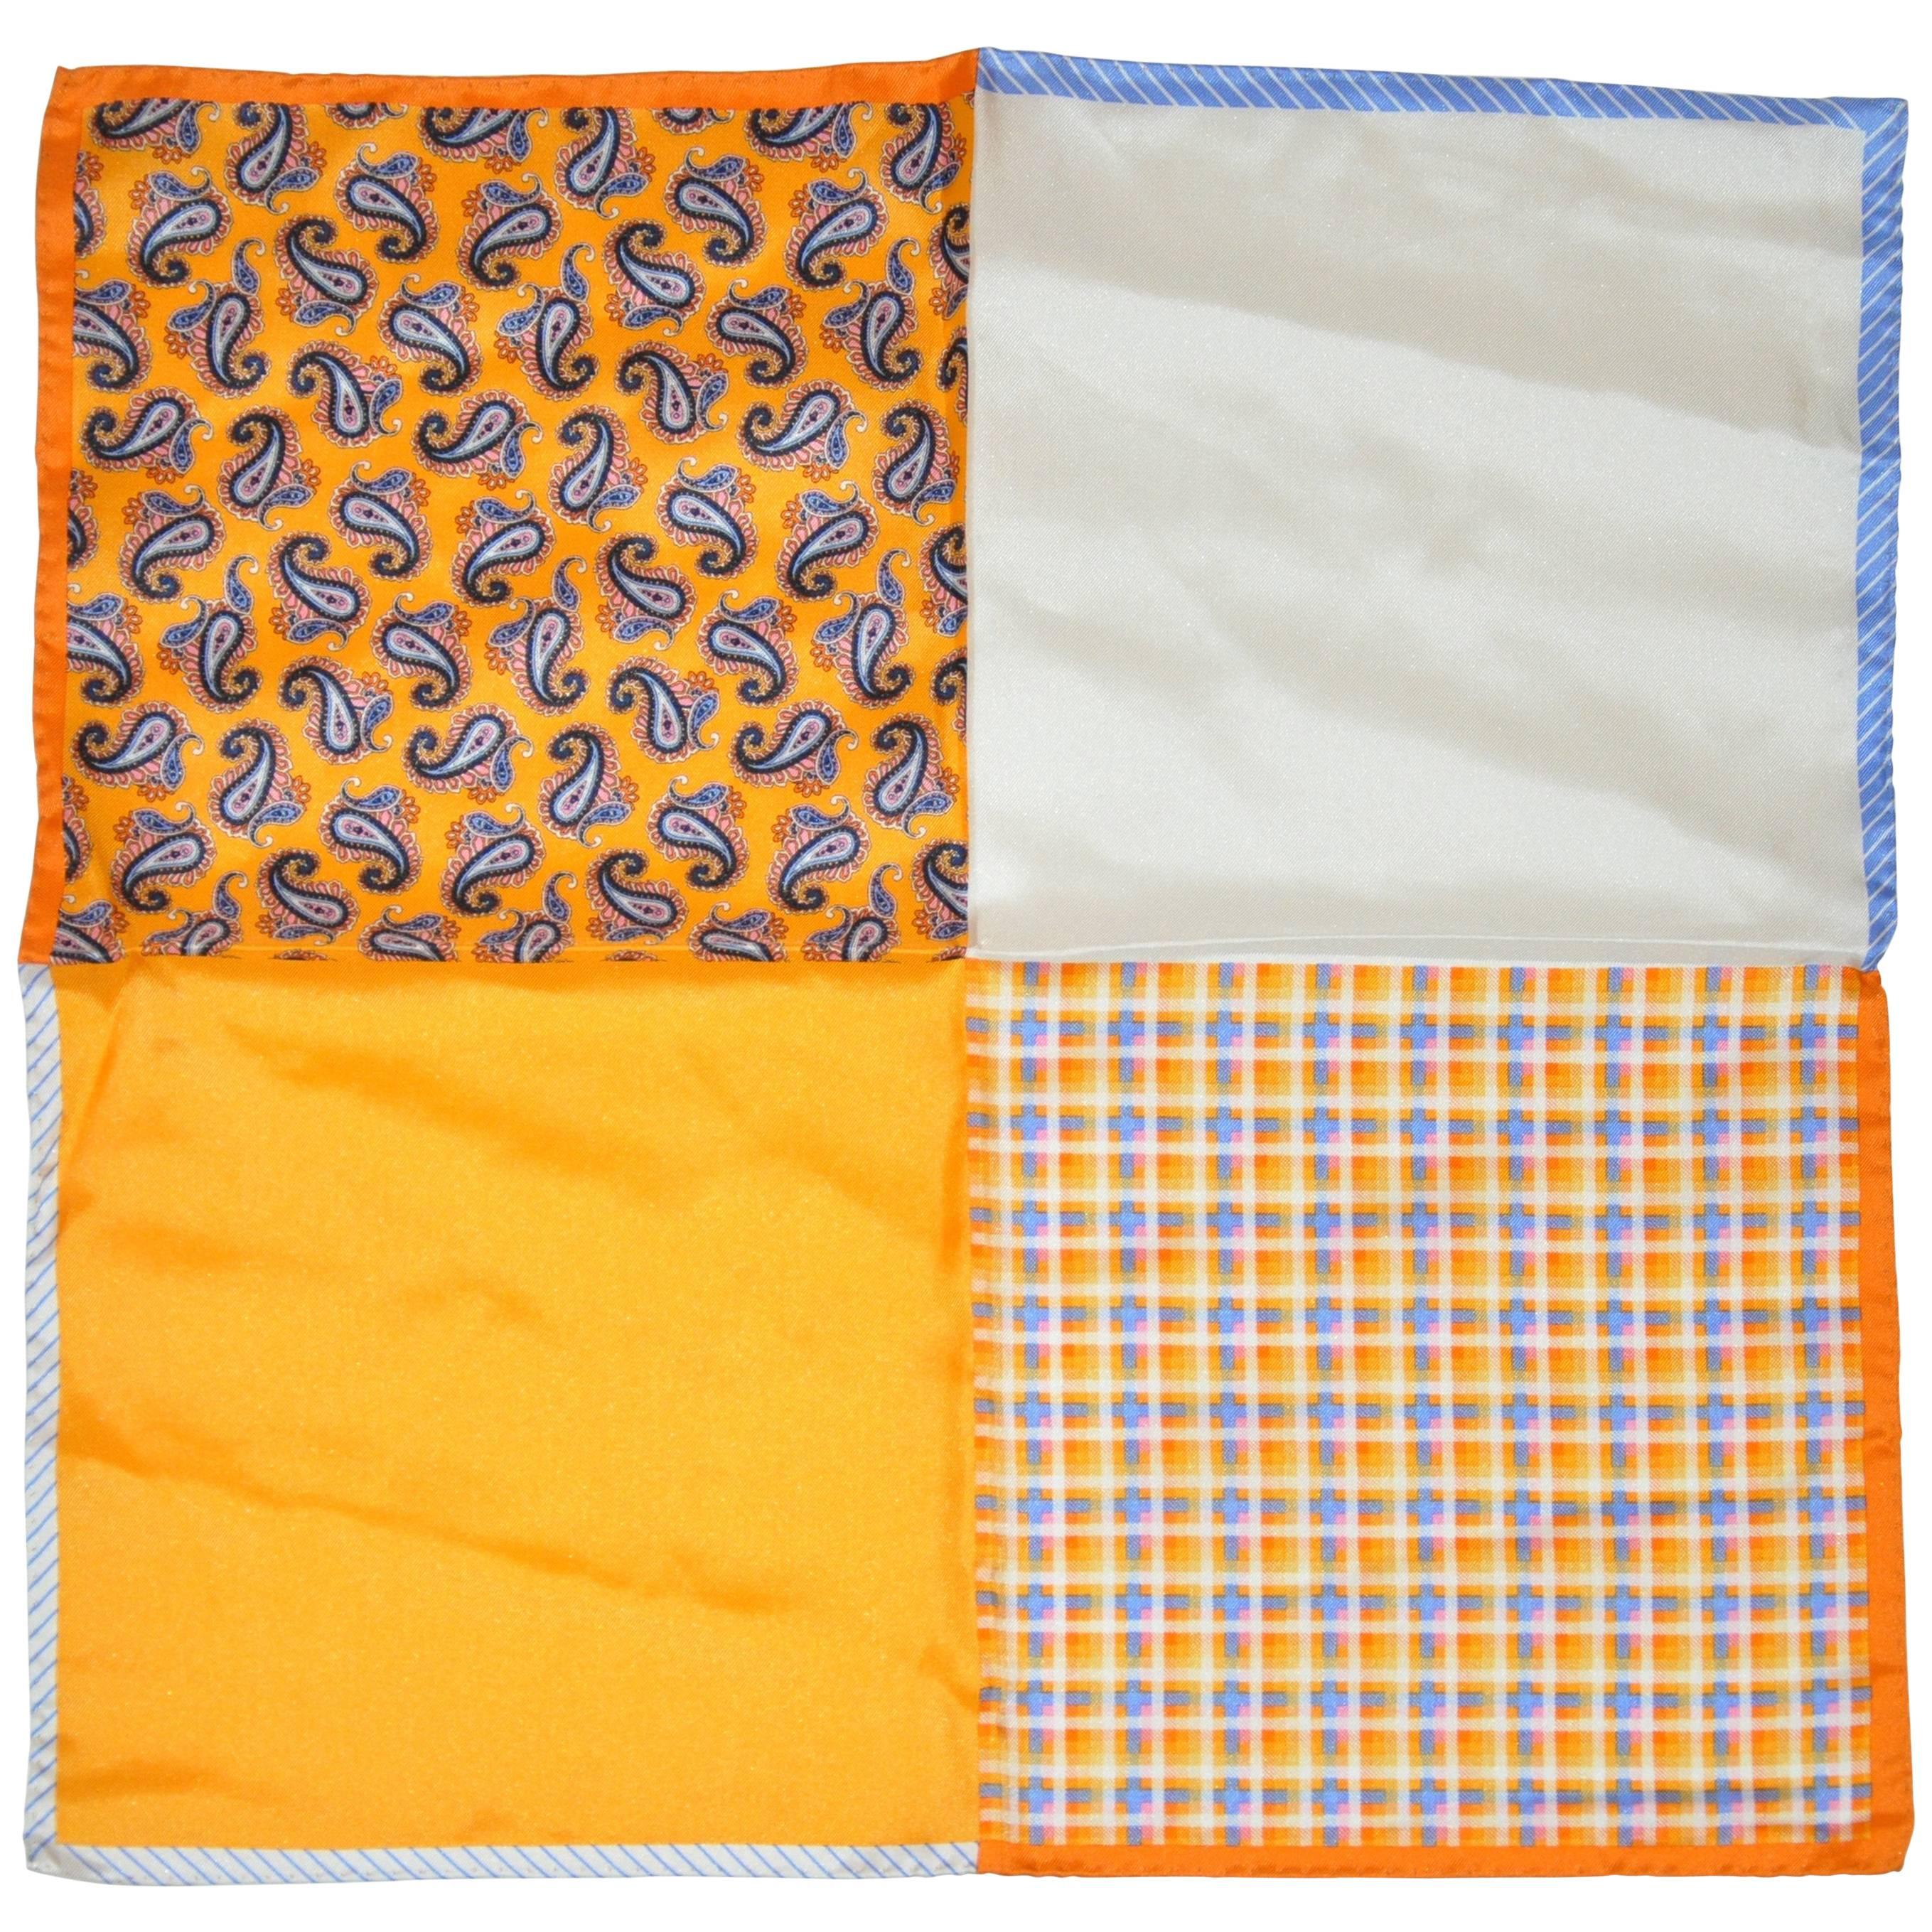 Paisley Plaid Stripes and Solids Silk Handkerchief